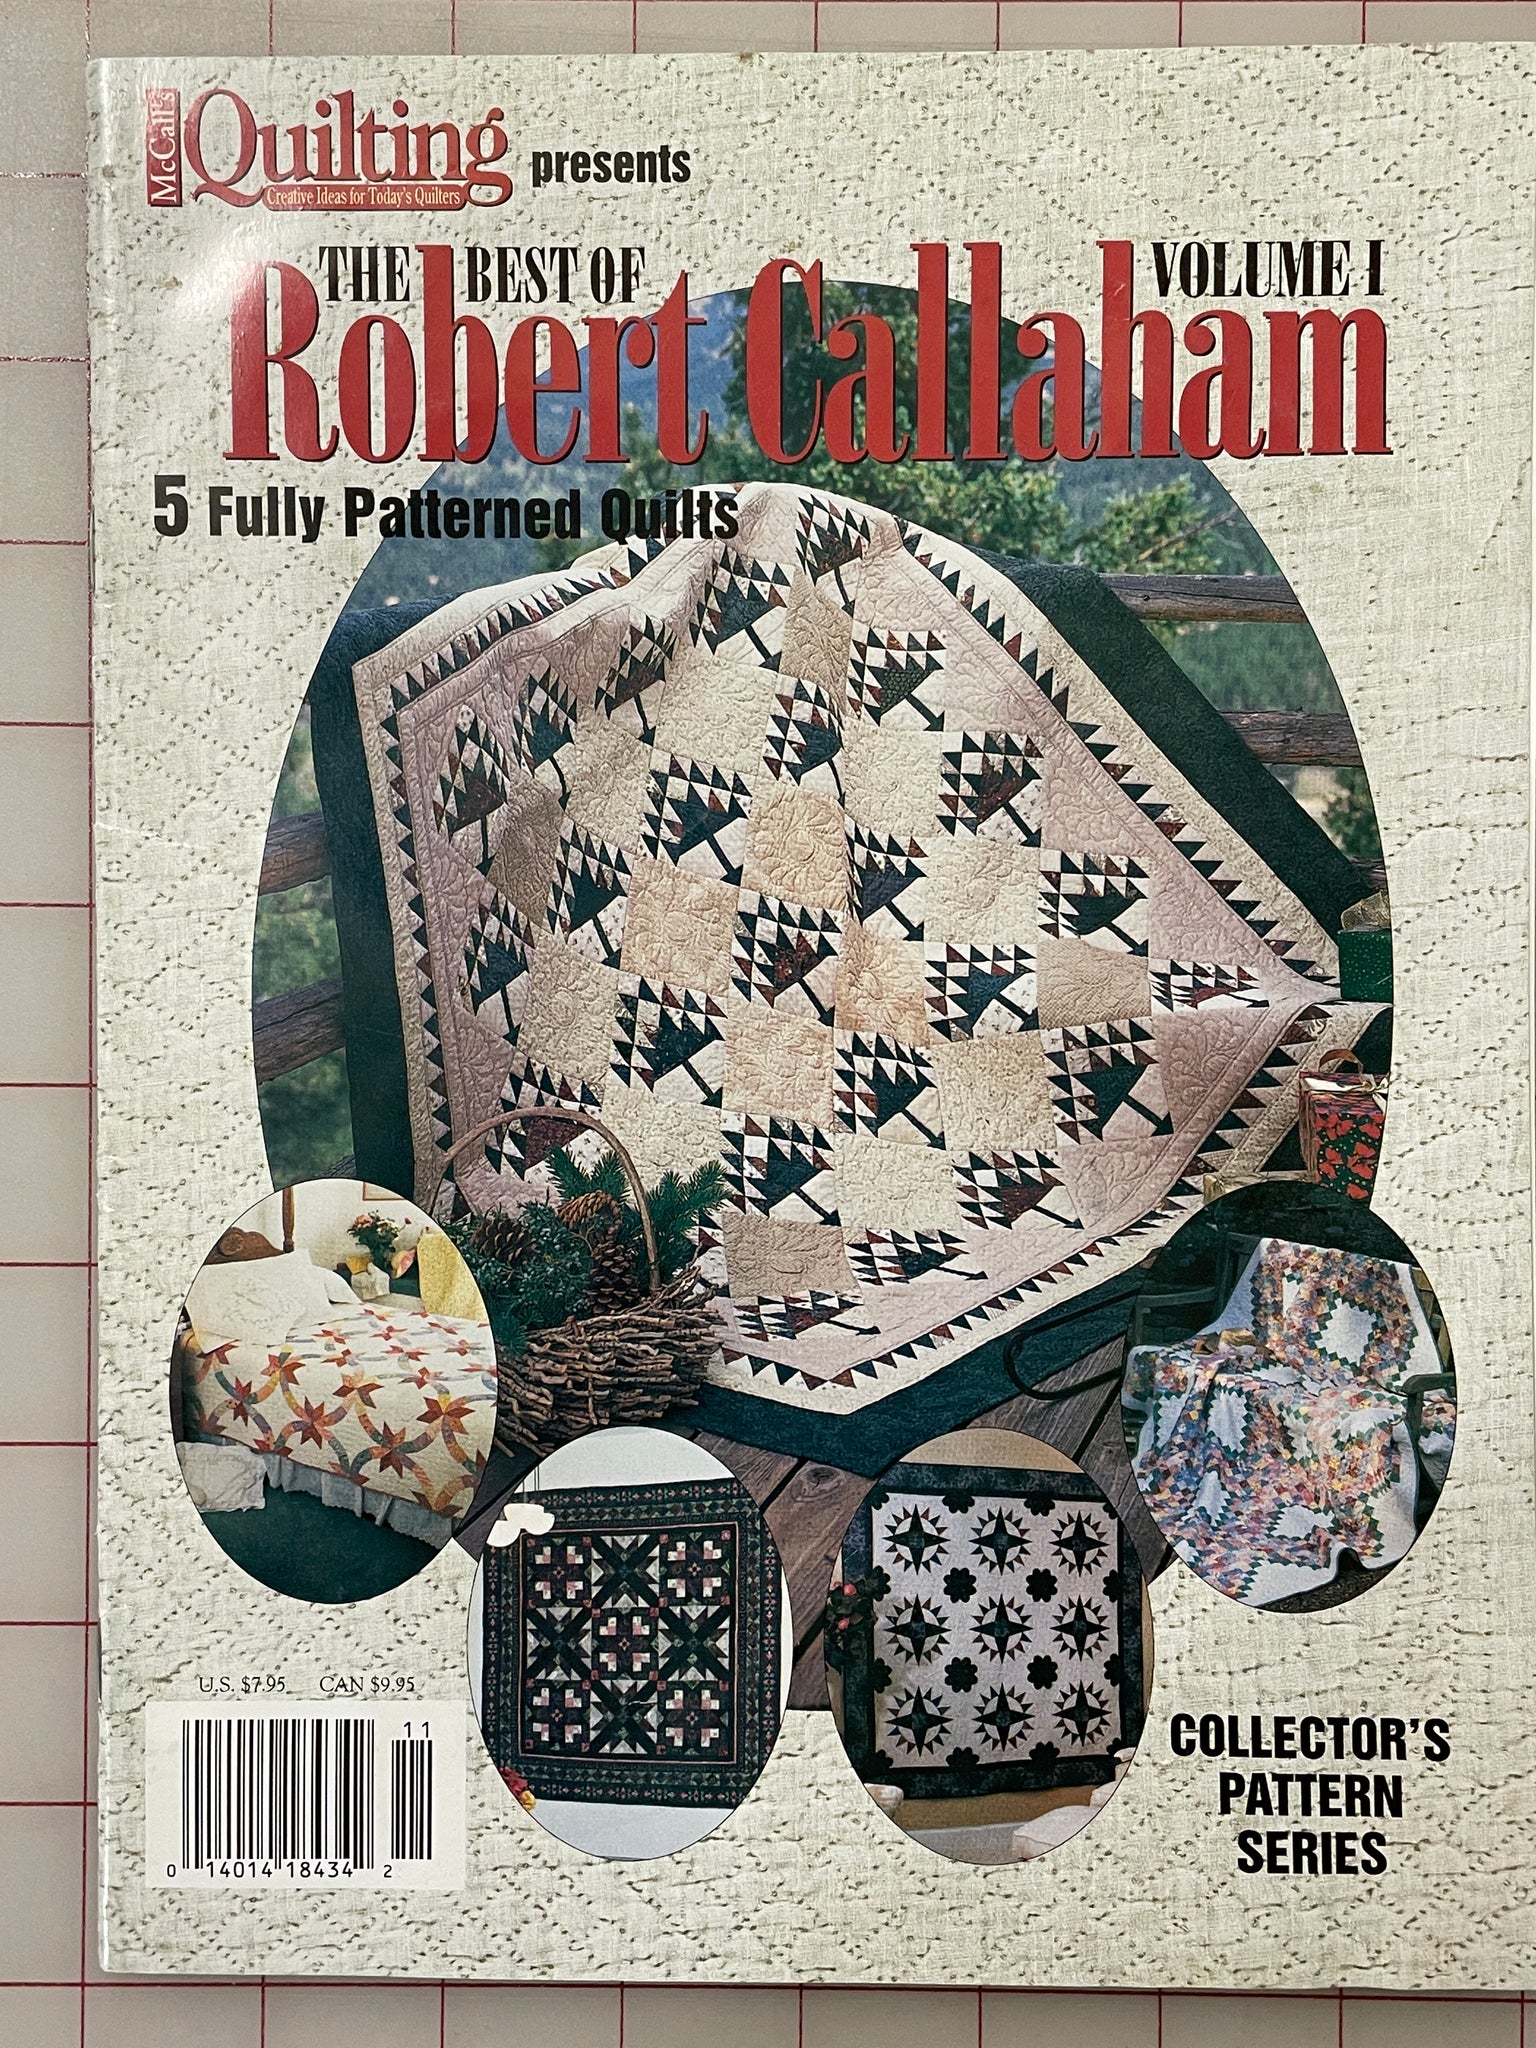 SALE 2001 Quilt Book - The Best of Robert Callaham Volume 1